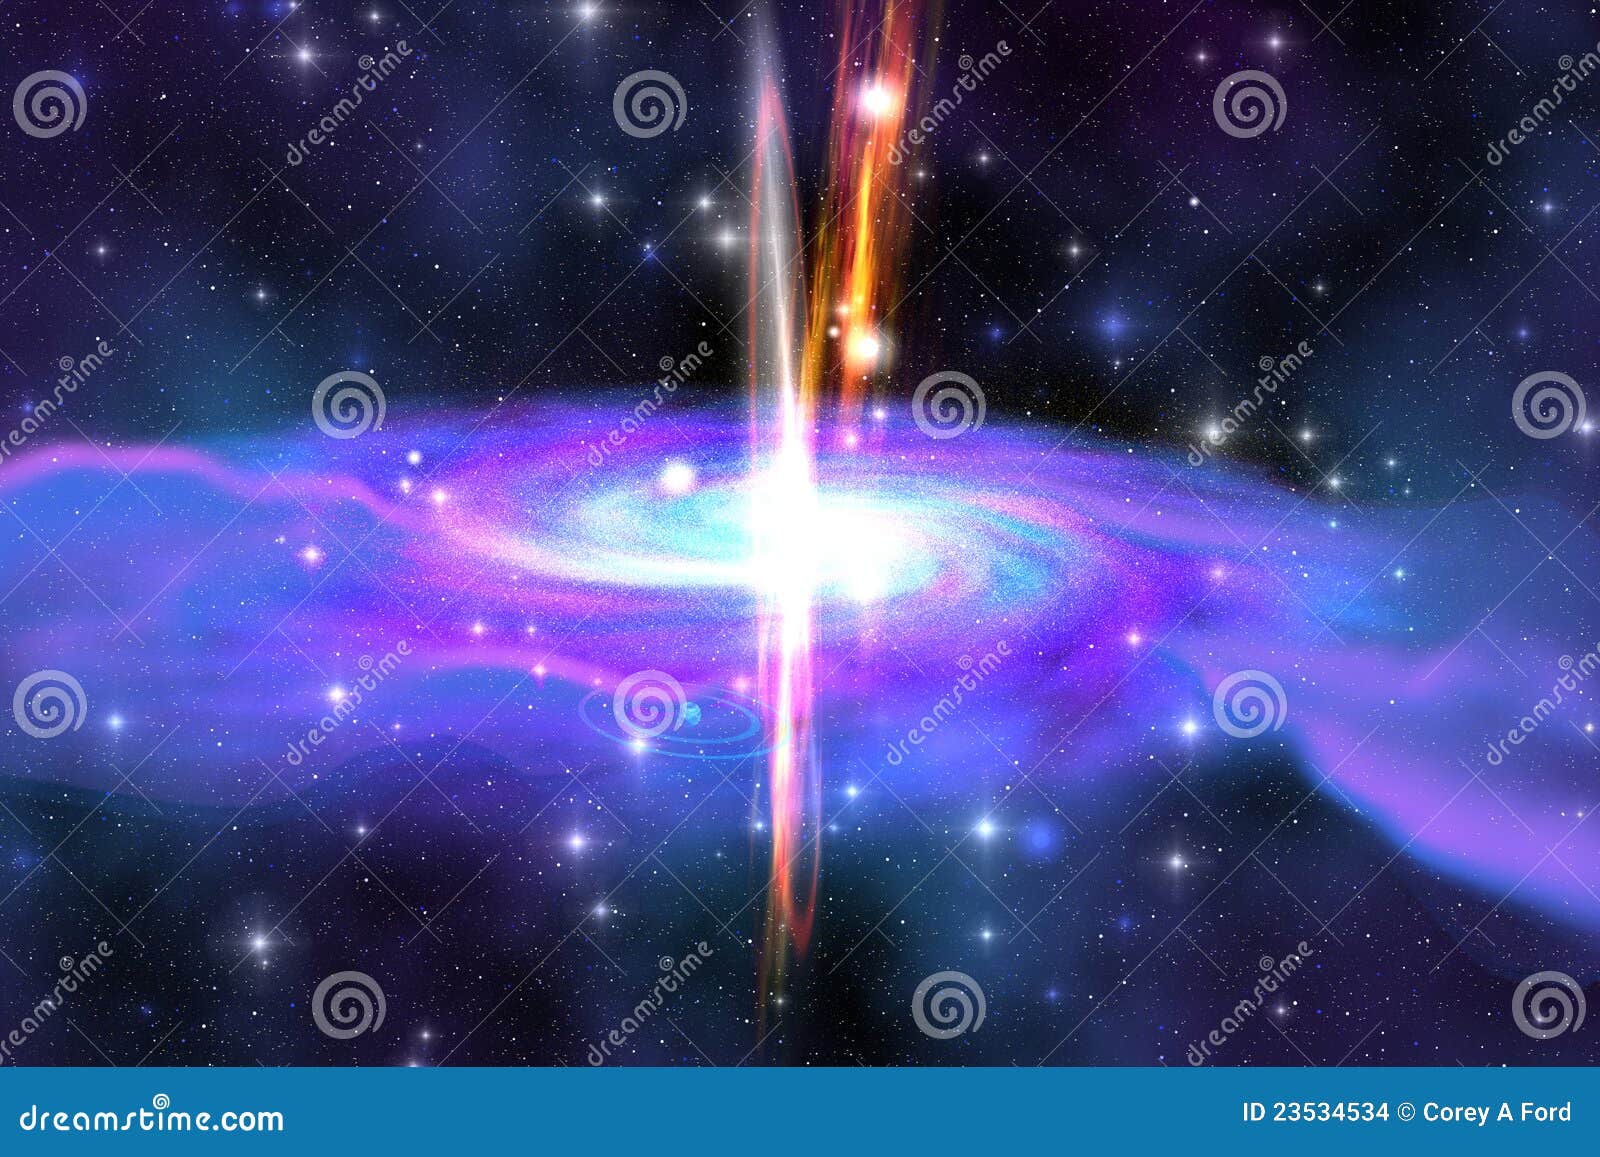 stellar black hole